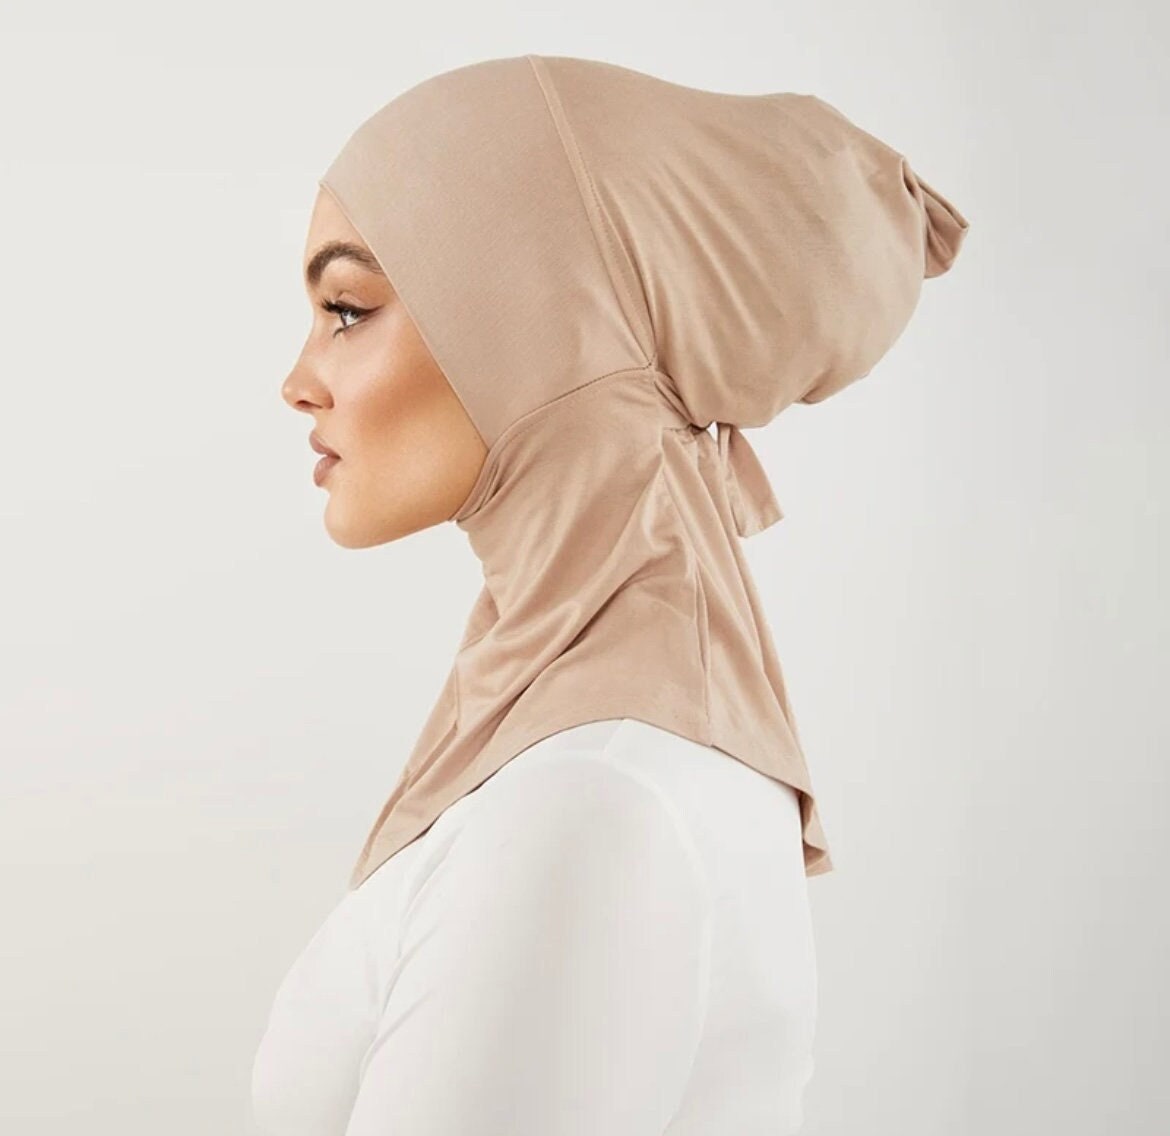 LINASHI Women Muslim Fake Collar Body Hijab Extensions Neck Cover